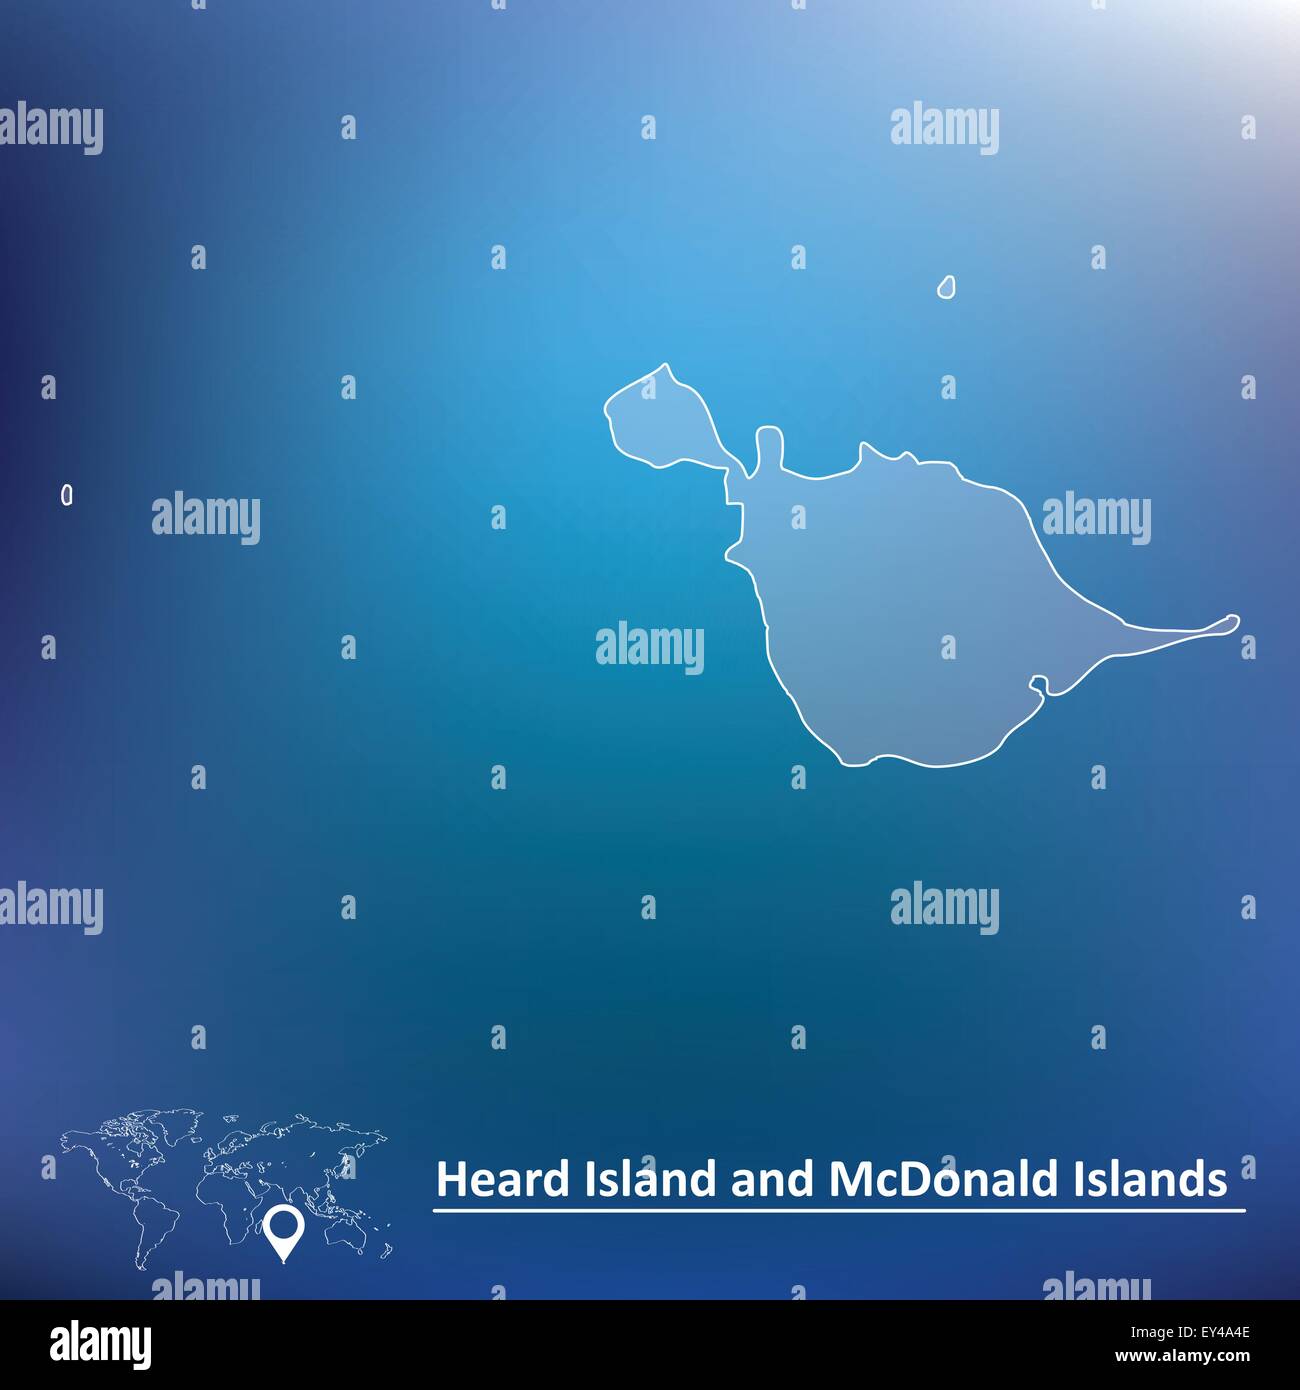 Map of Heard Island and McDonald Islands - vector illustration Stock Vector